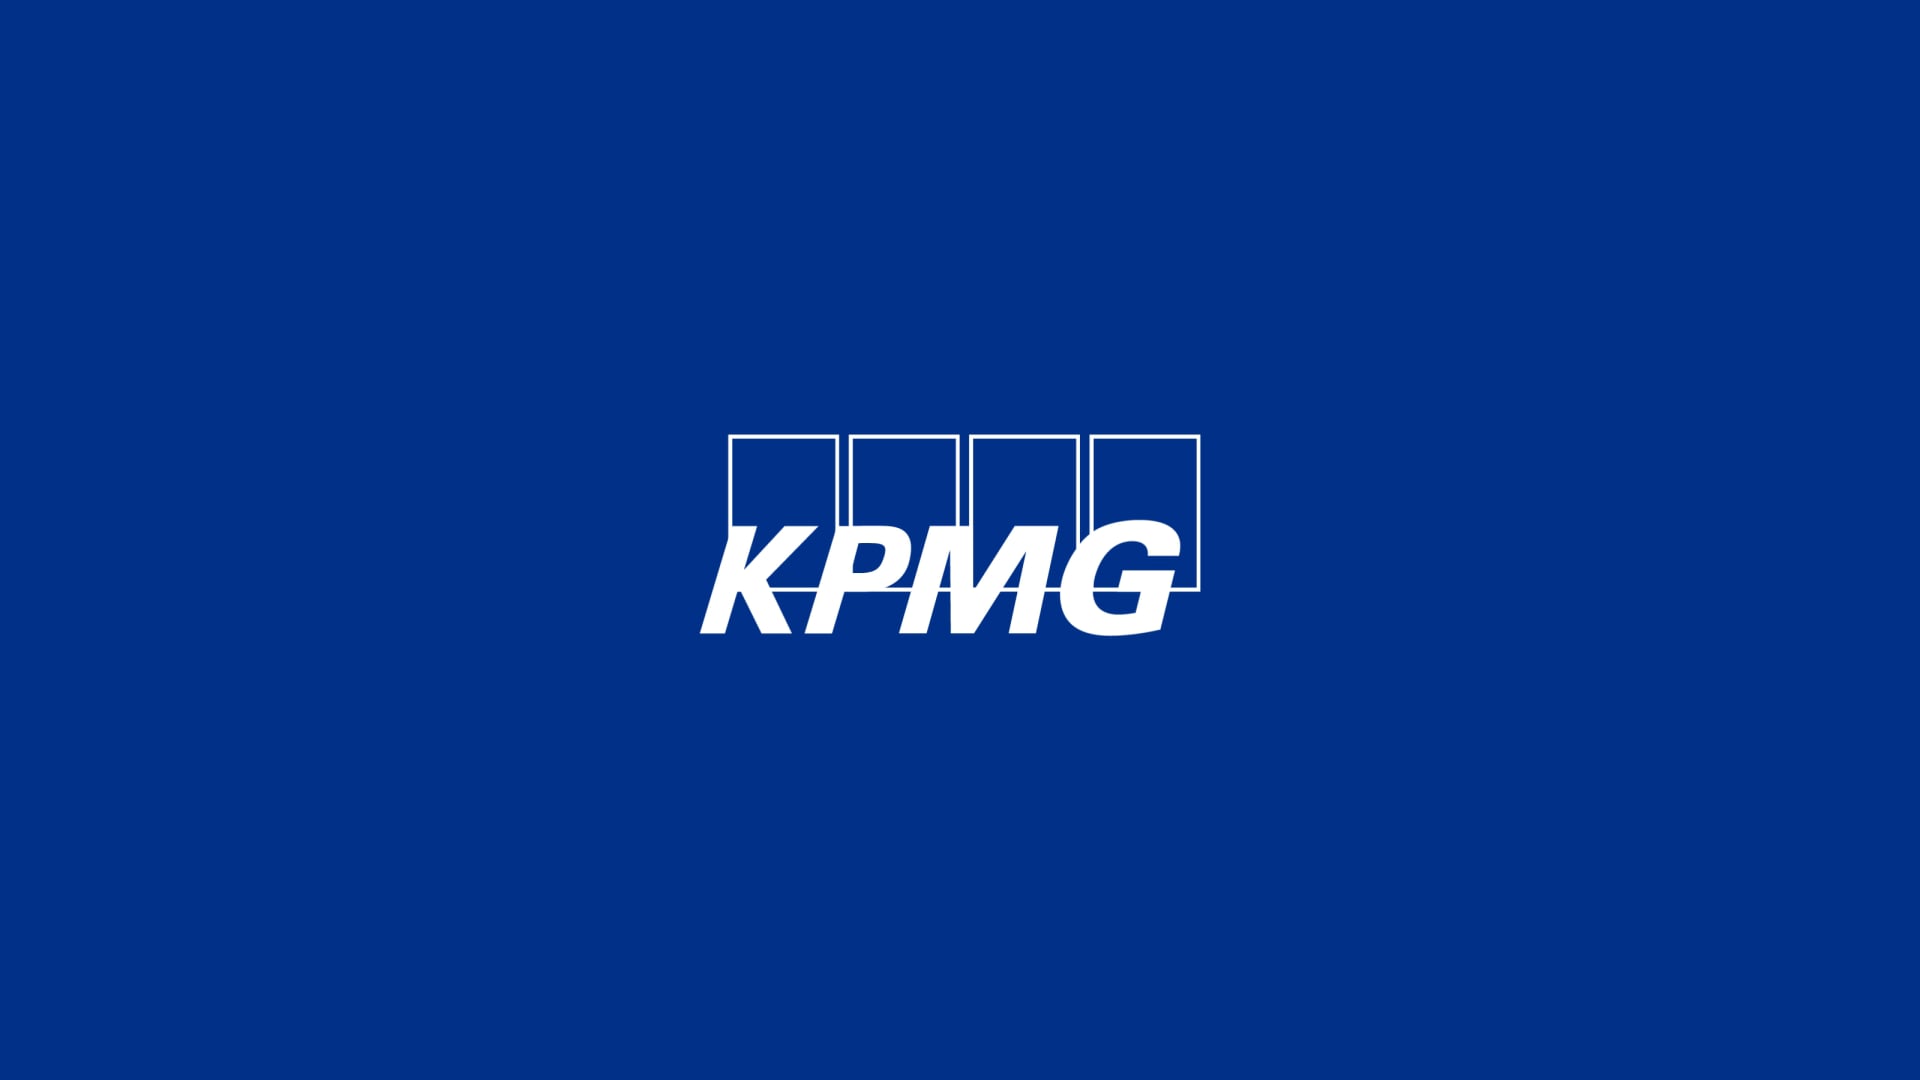 KPMG-GenericA_Blue